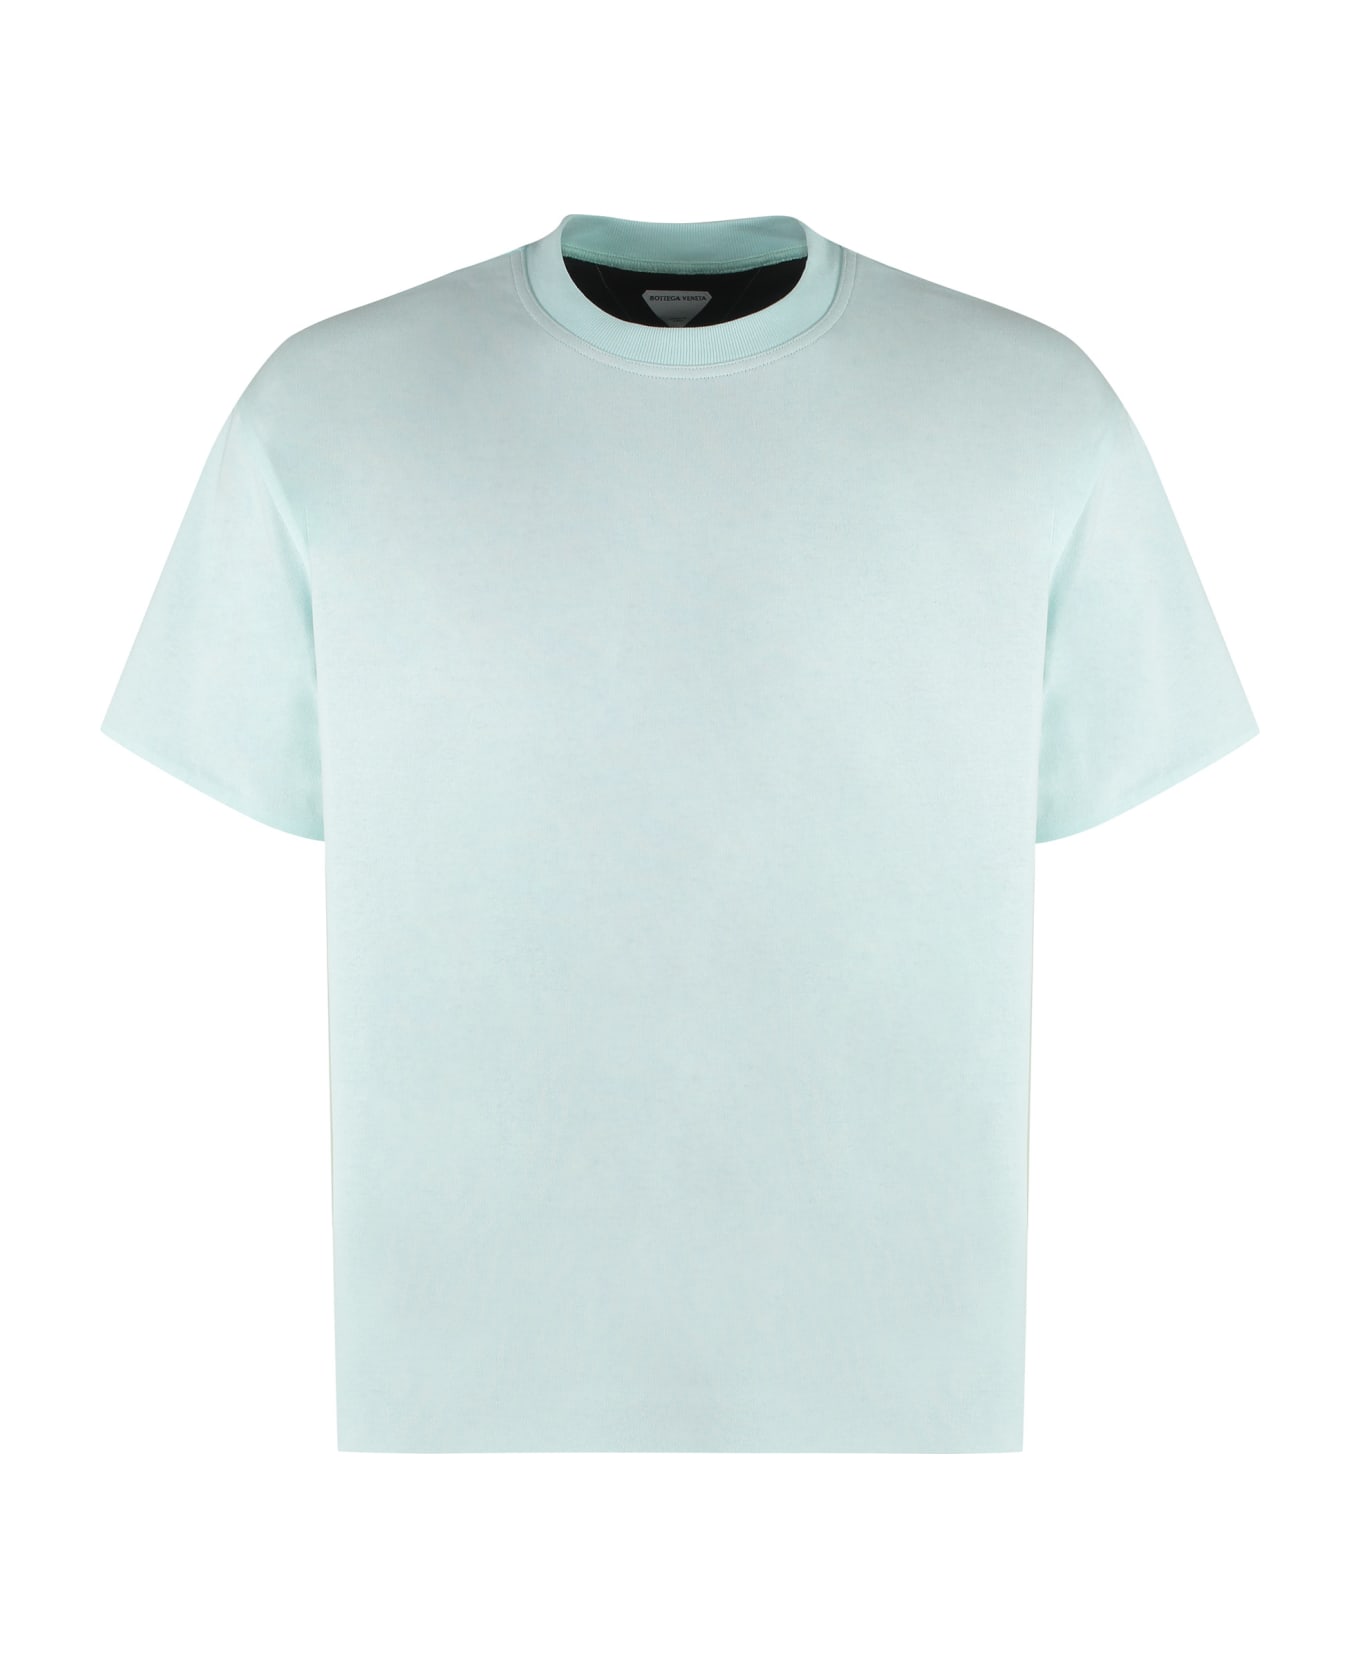 Bottega Veneta Cotton Crew-neck T-shirt - Pale turquoise navy